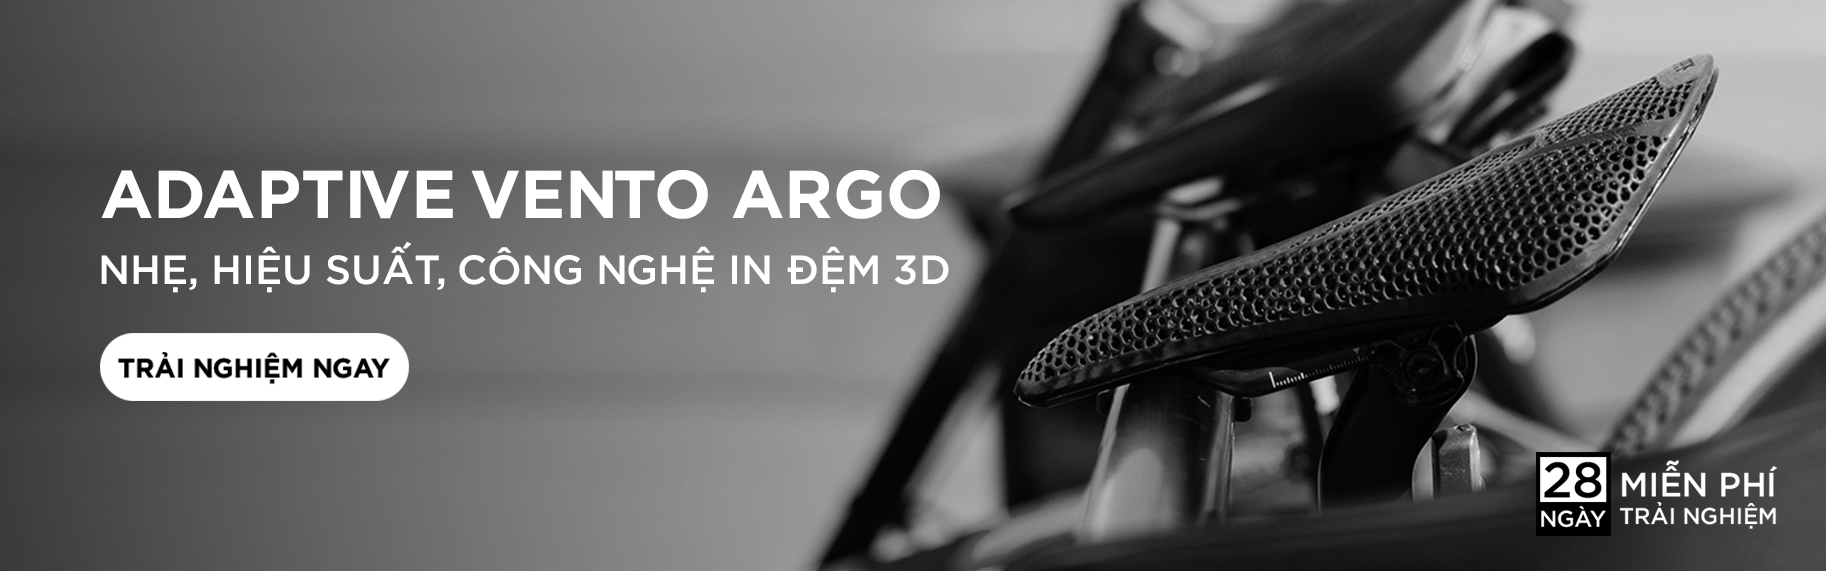 Yên xe đạp Vento Argo Adaptive